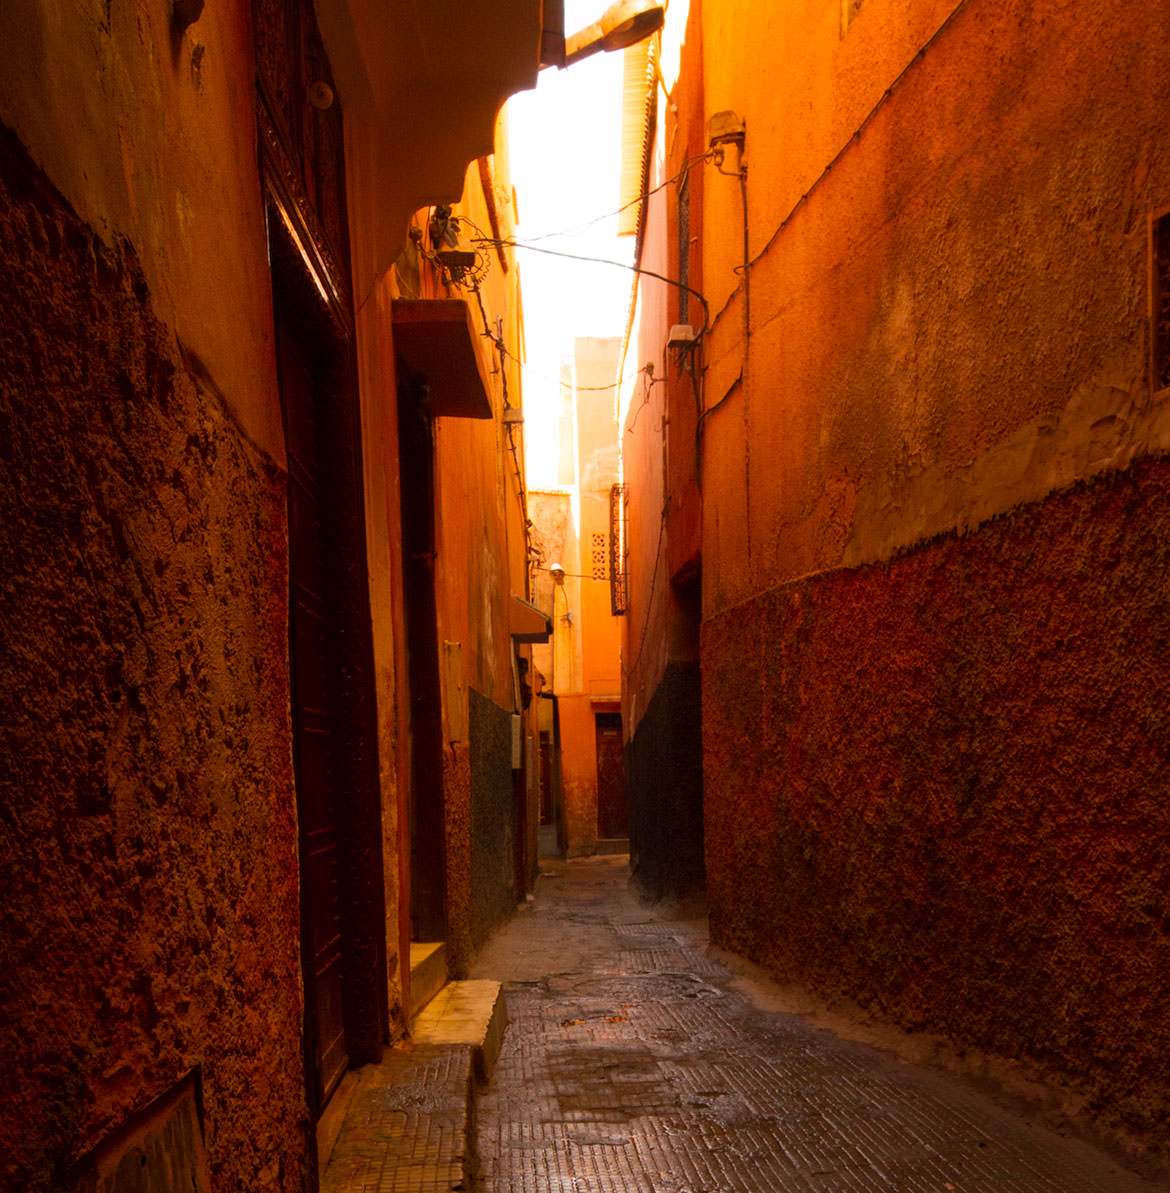 Sandstone Alley in the Marrakech medina.